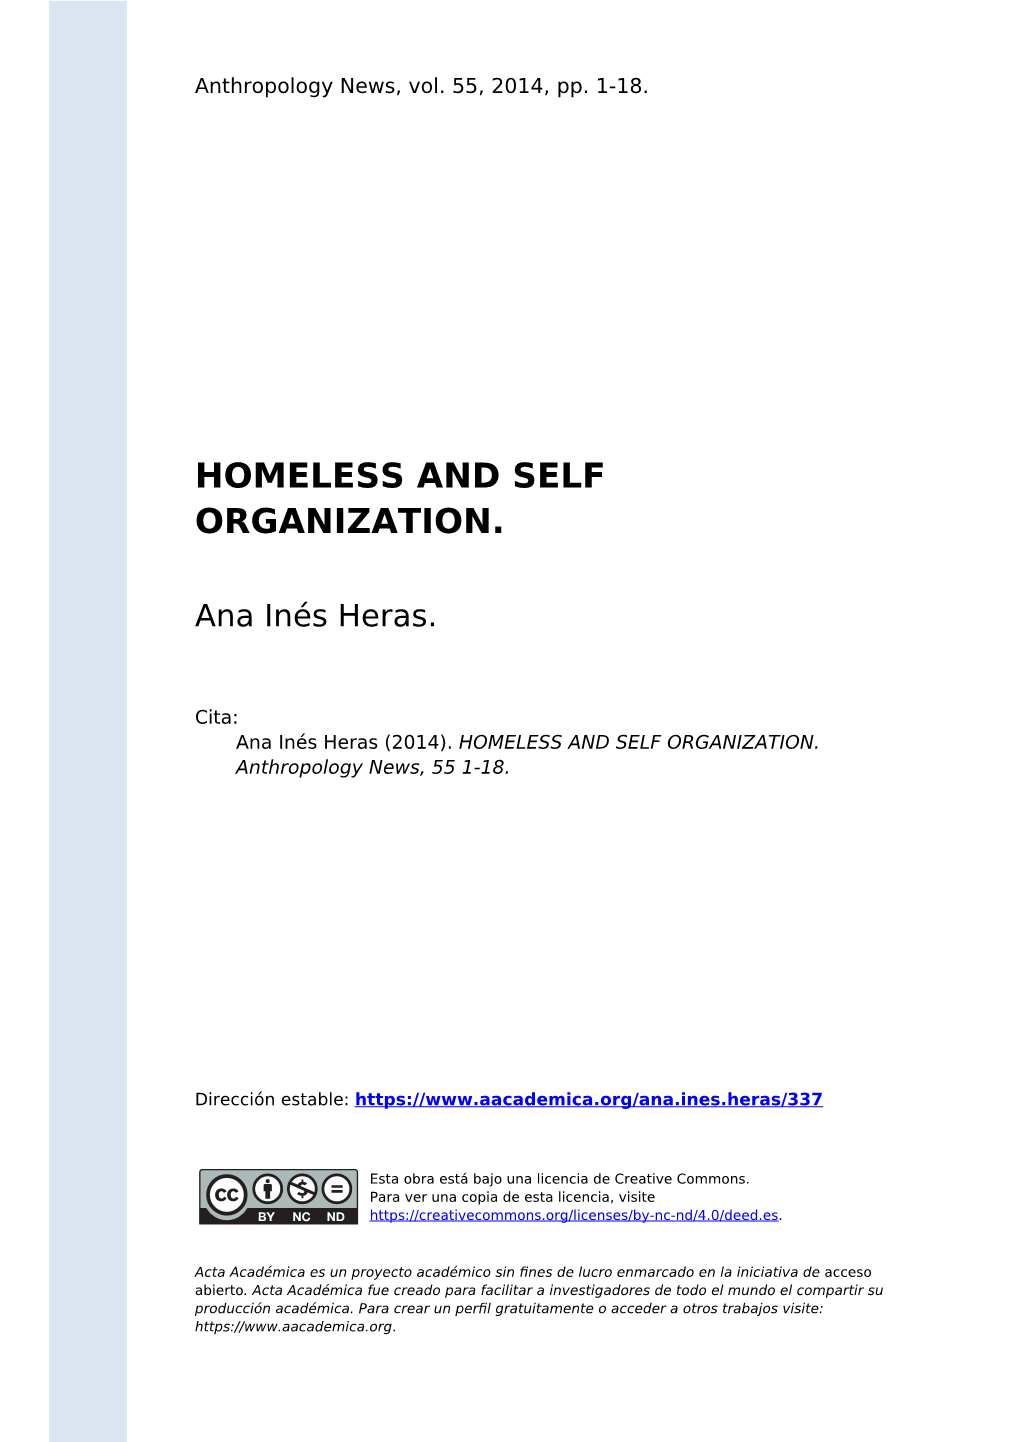 Homeless and Self Organization